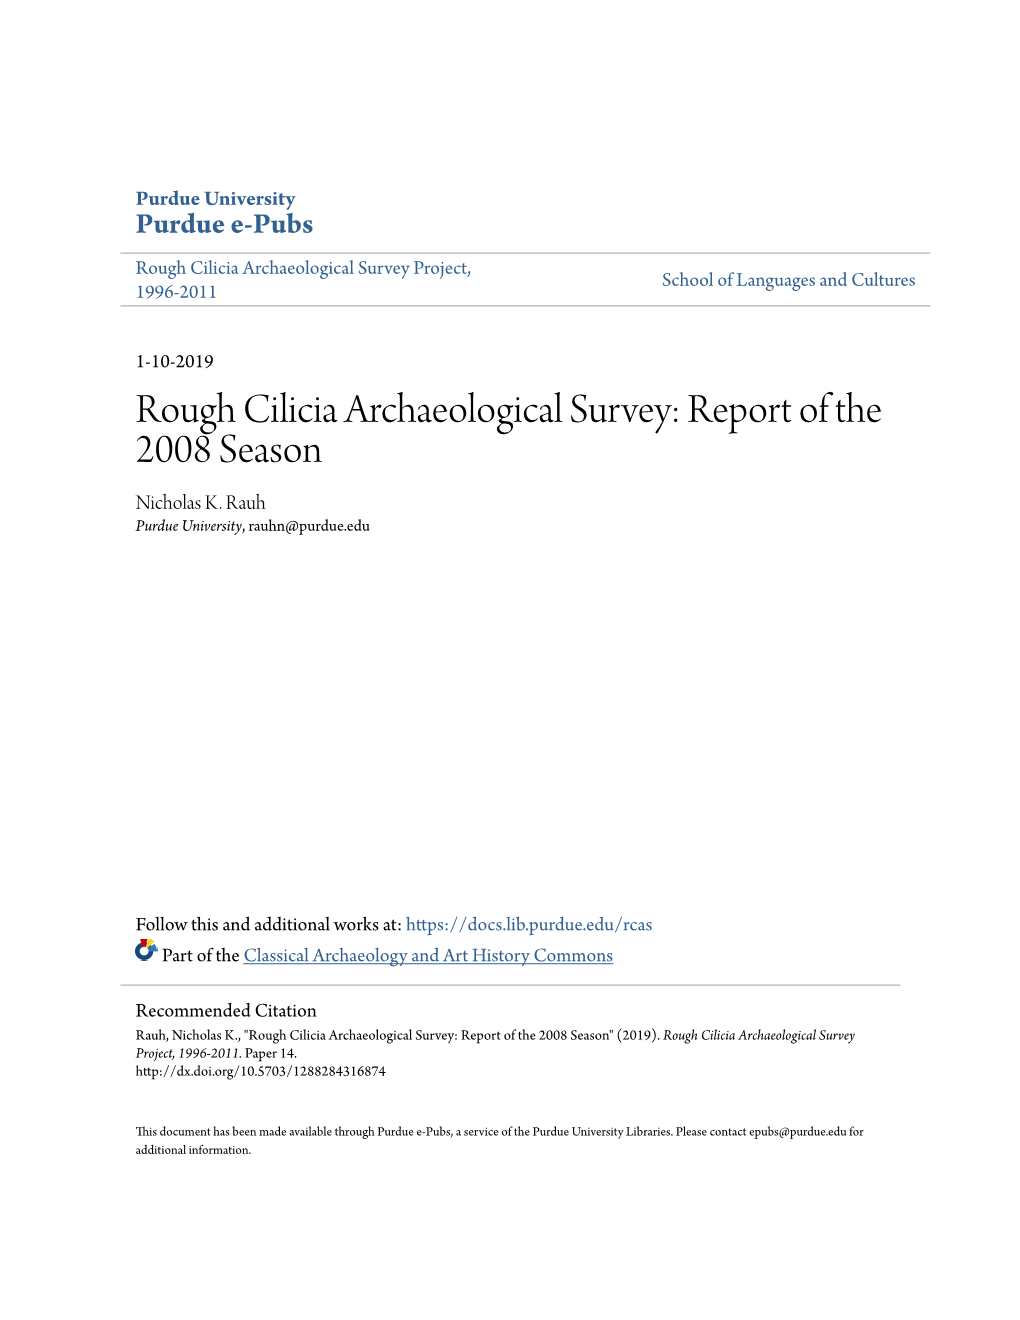 Rough Cilicia Archaeological Survey: Report of the 2008 Season Nicholas K